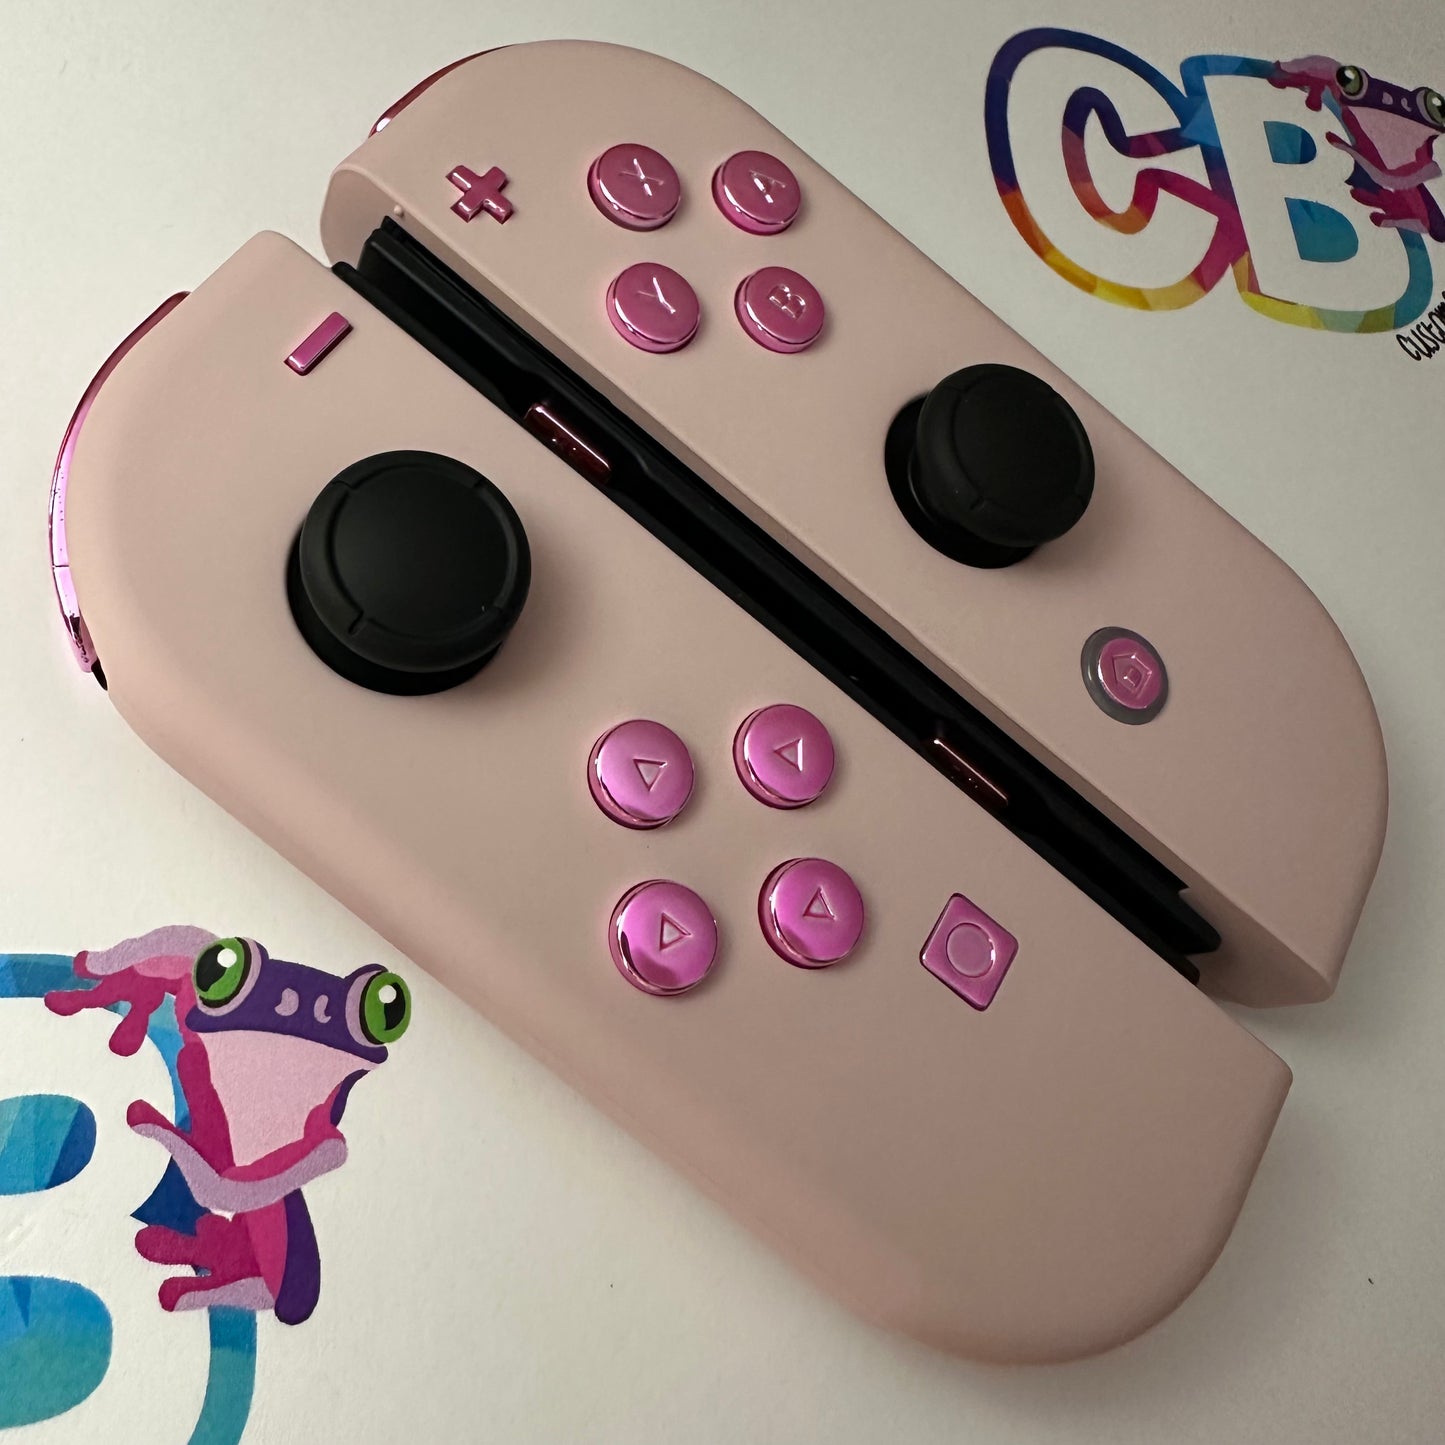 Custom Nintendo Switch Pro Controller in Sakura Pink With 